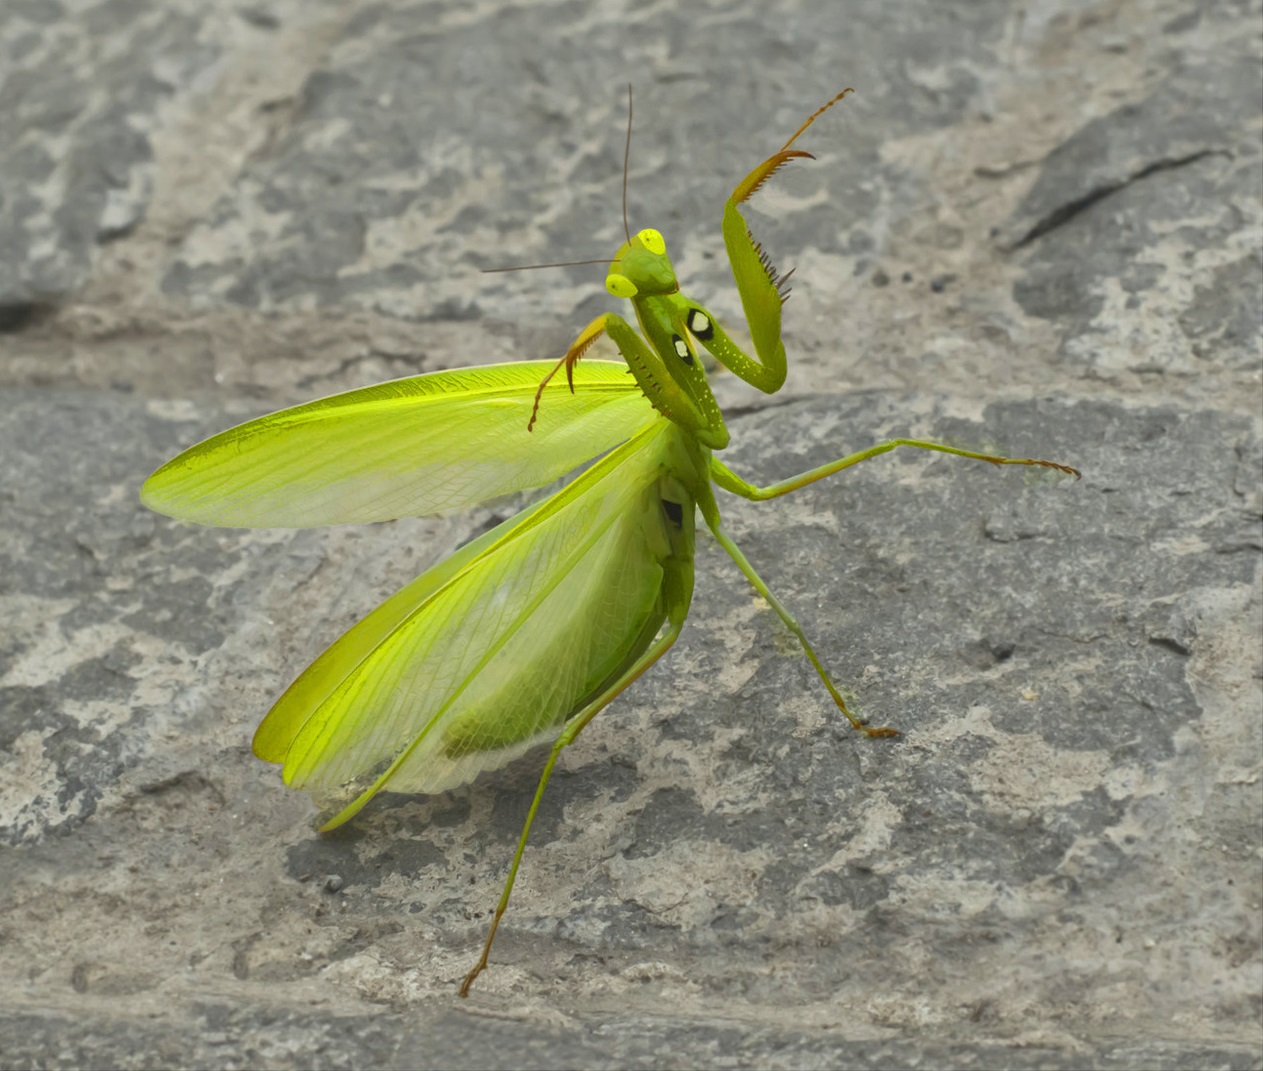 Mantis i zakonshëm, ose mantis fetare (latin Mantis religiosa)